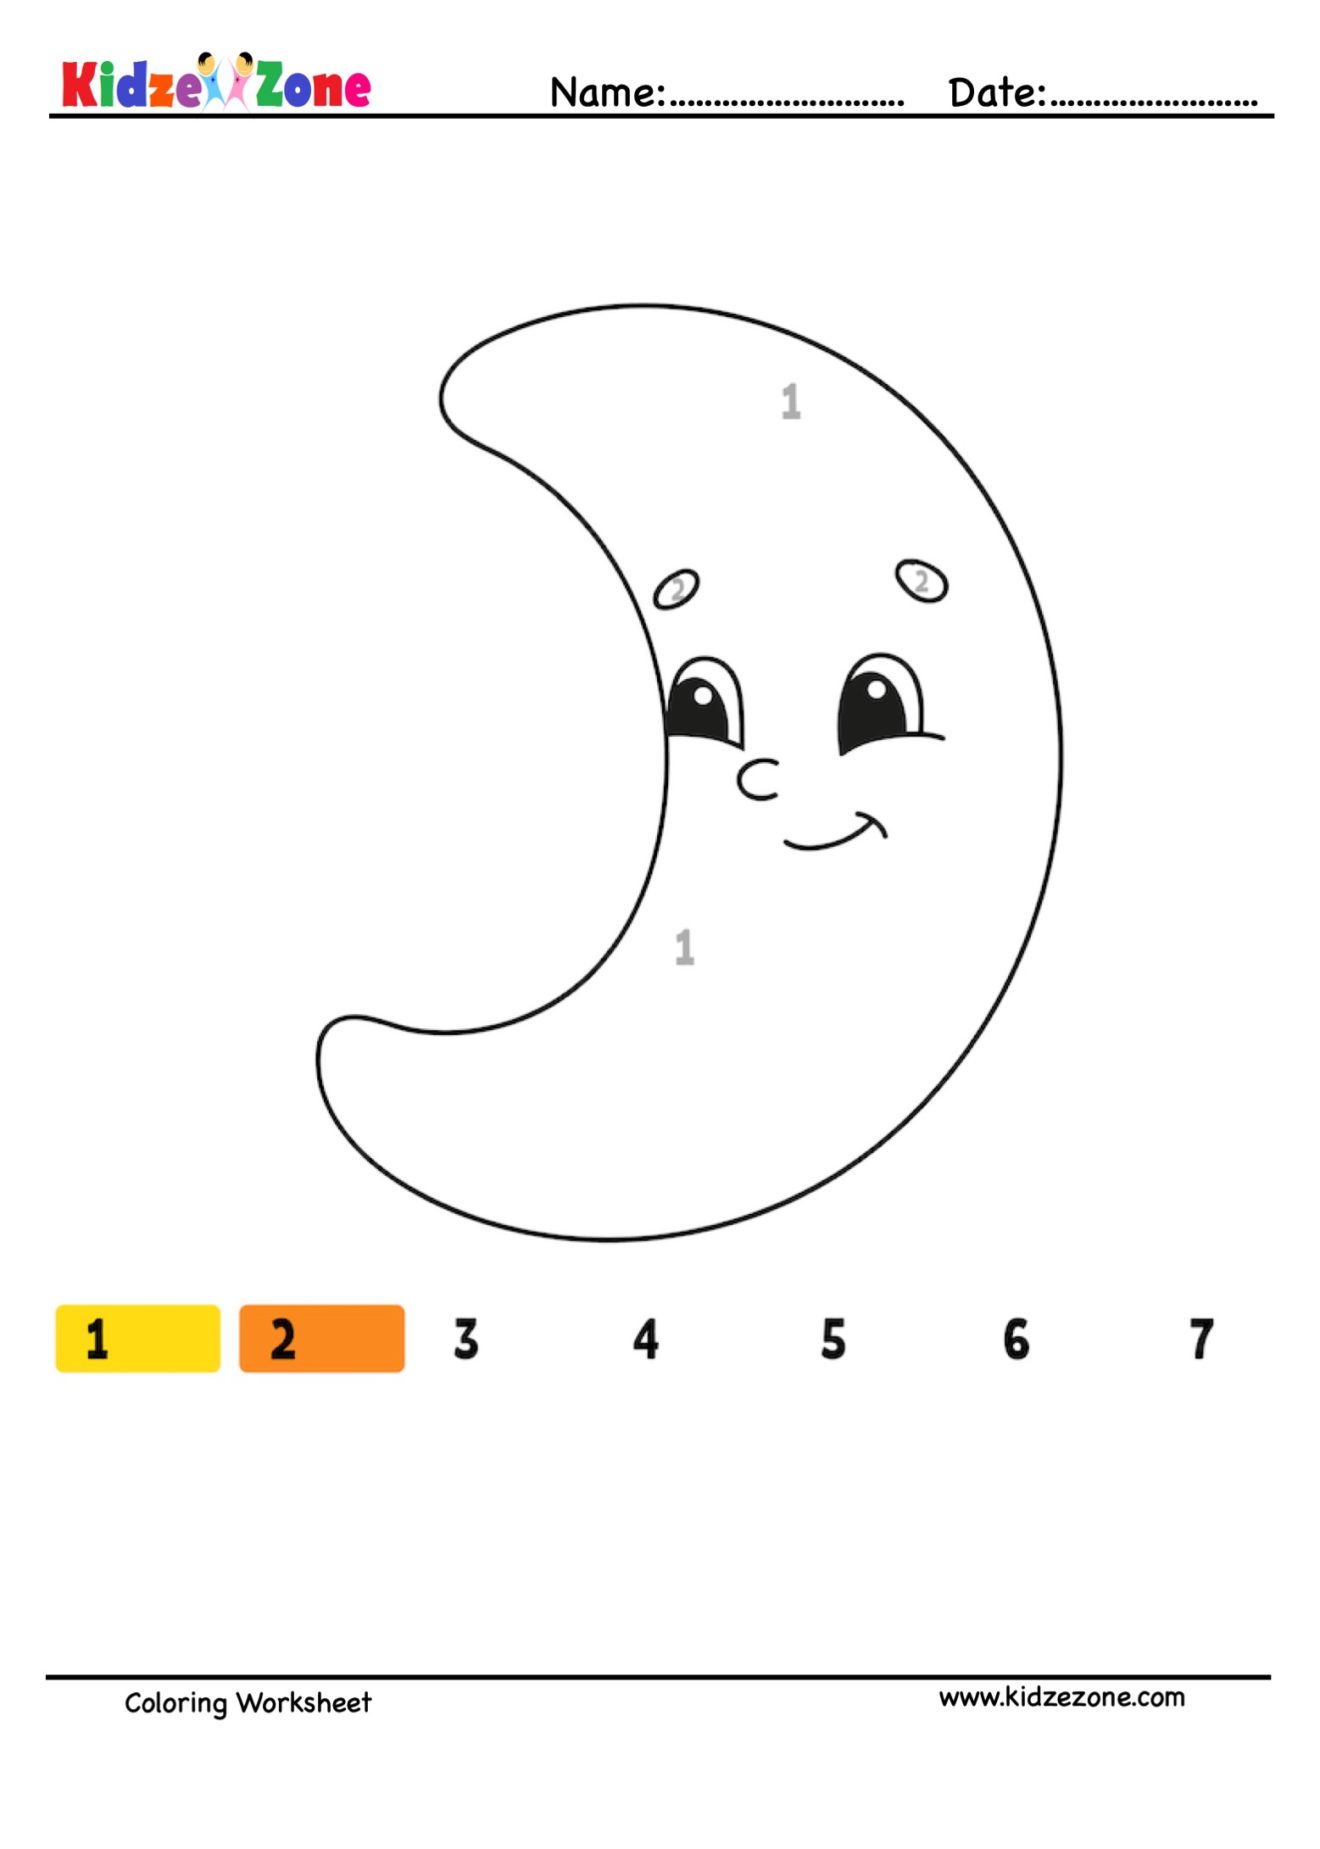 crescent-moon-number-coloring-fun-worksheet-kidzezone